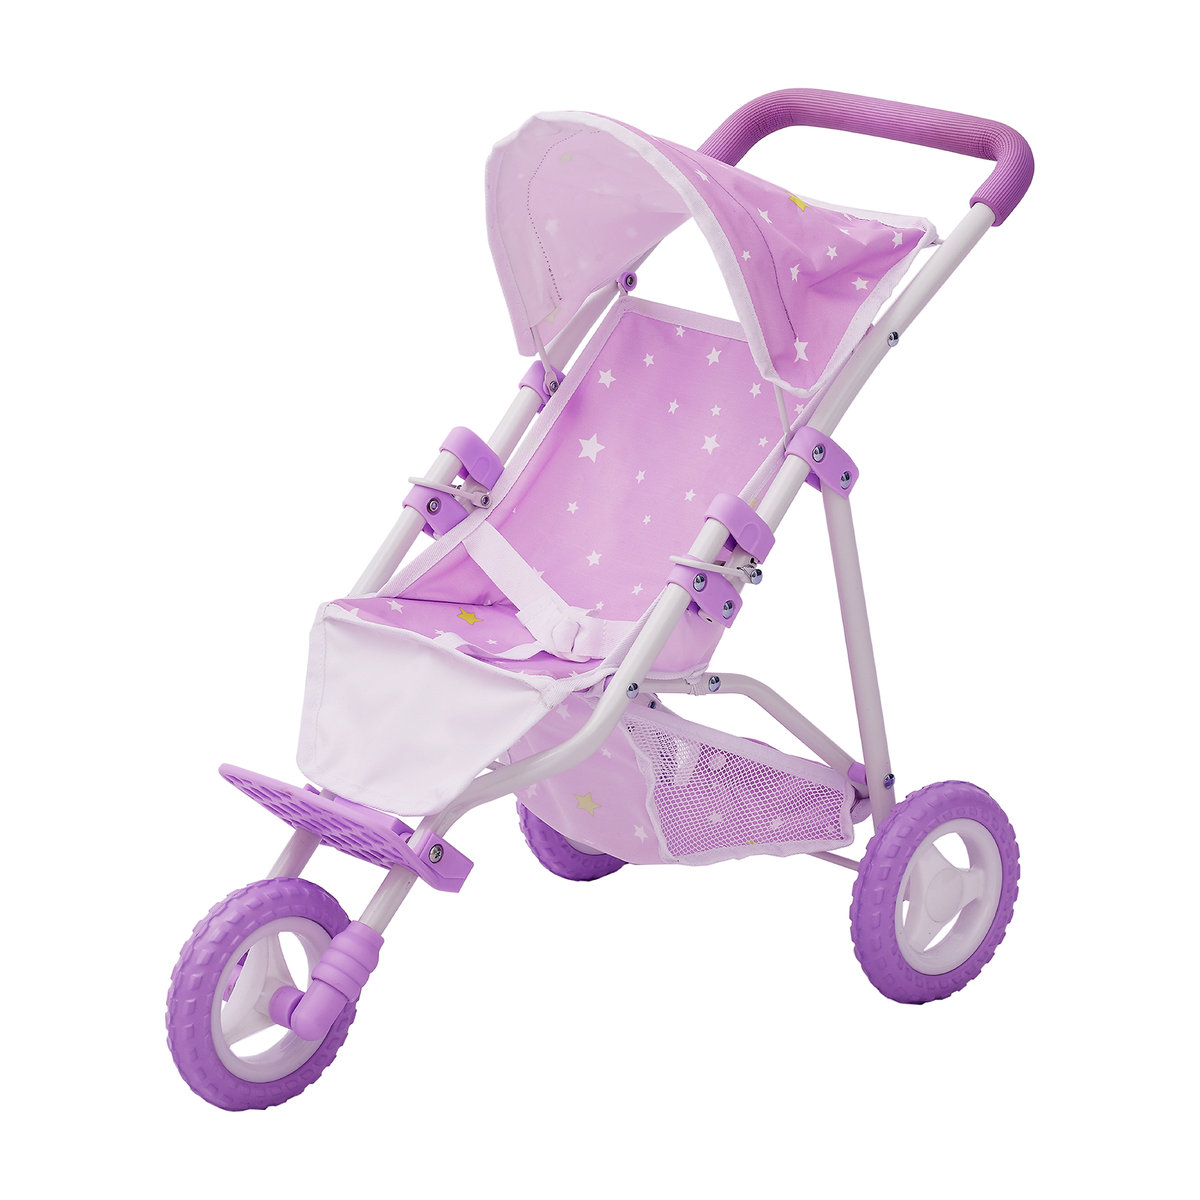 Olivia's Little World Fioletowy Wózek dla lalek Wózek spacerowy dla Lalek z Schowkiem OL-00006